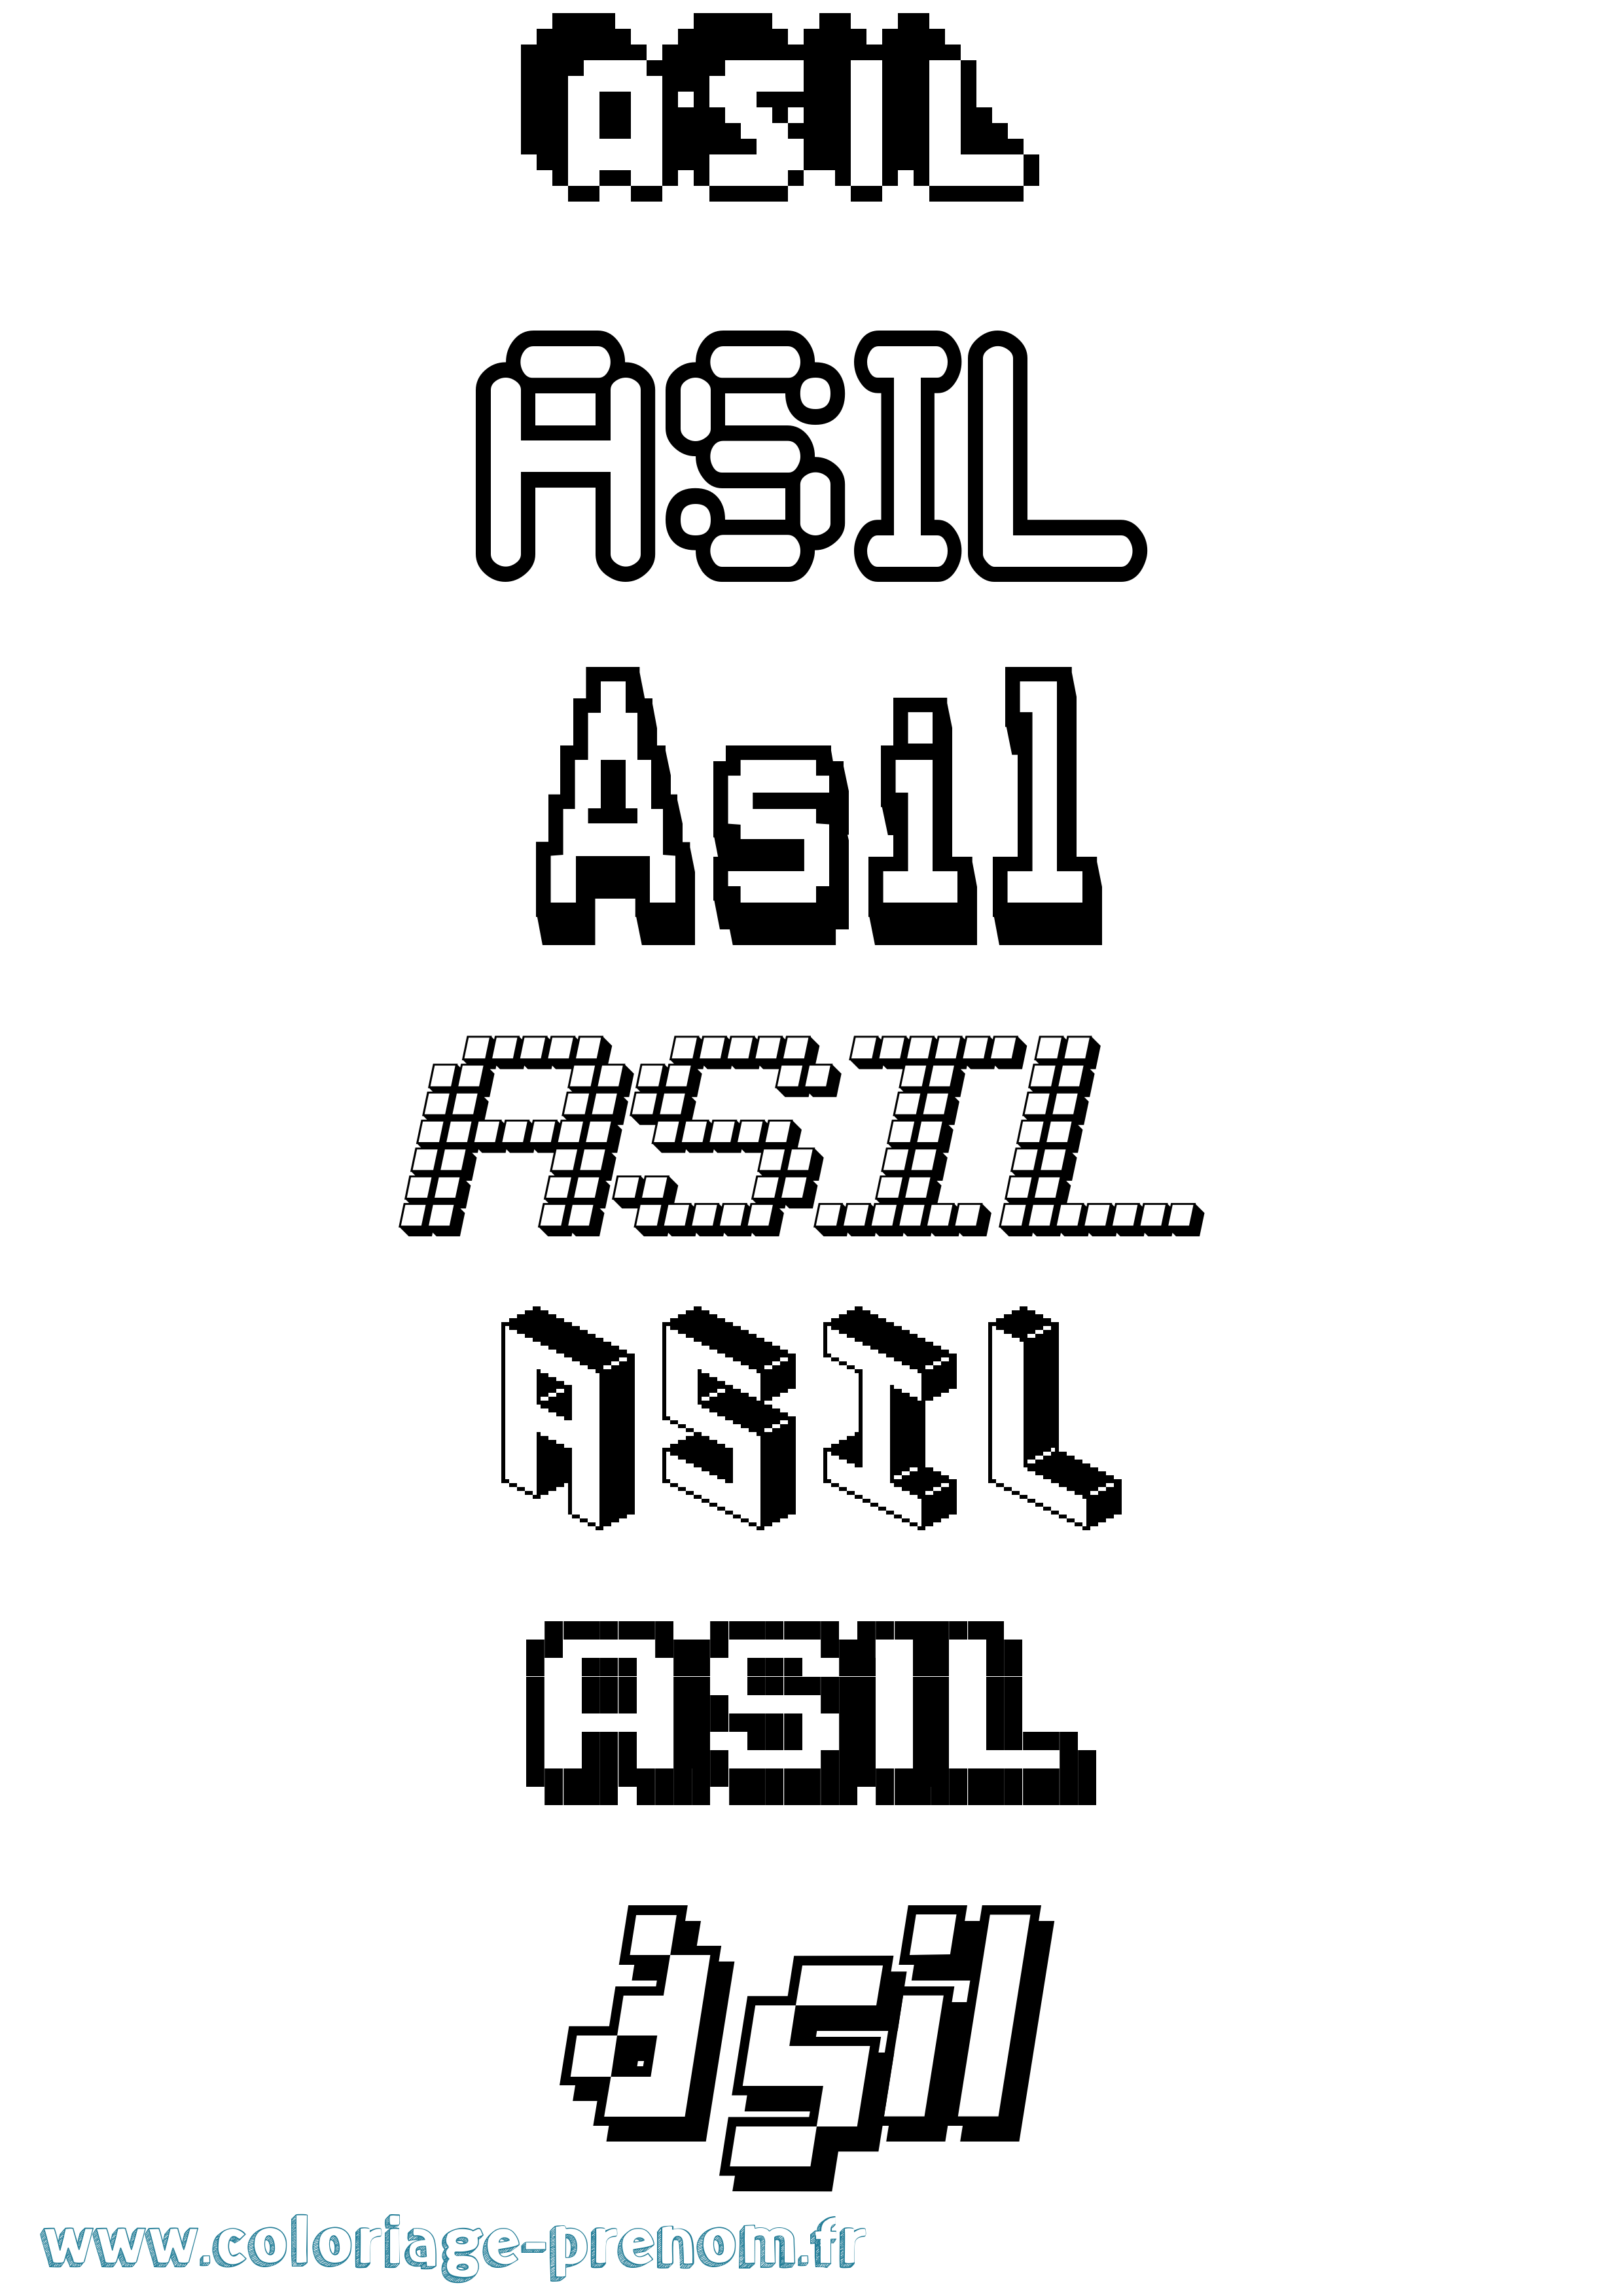 Coloriage prénom Asil Pixel